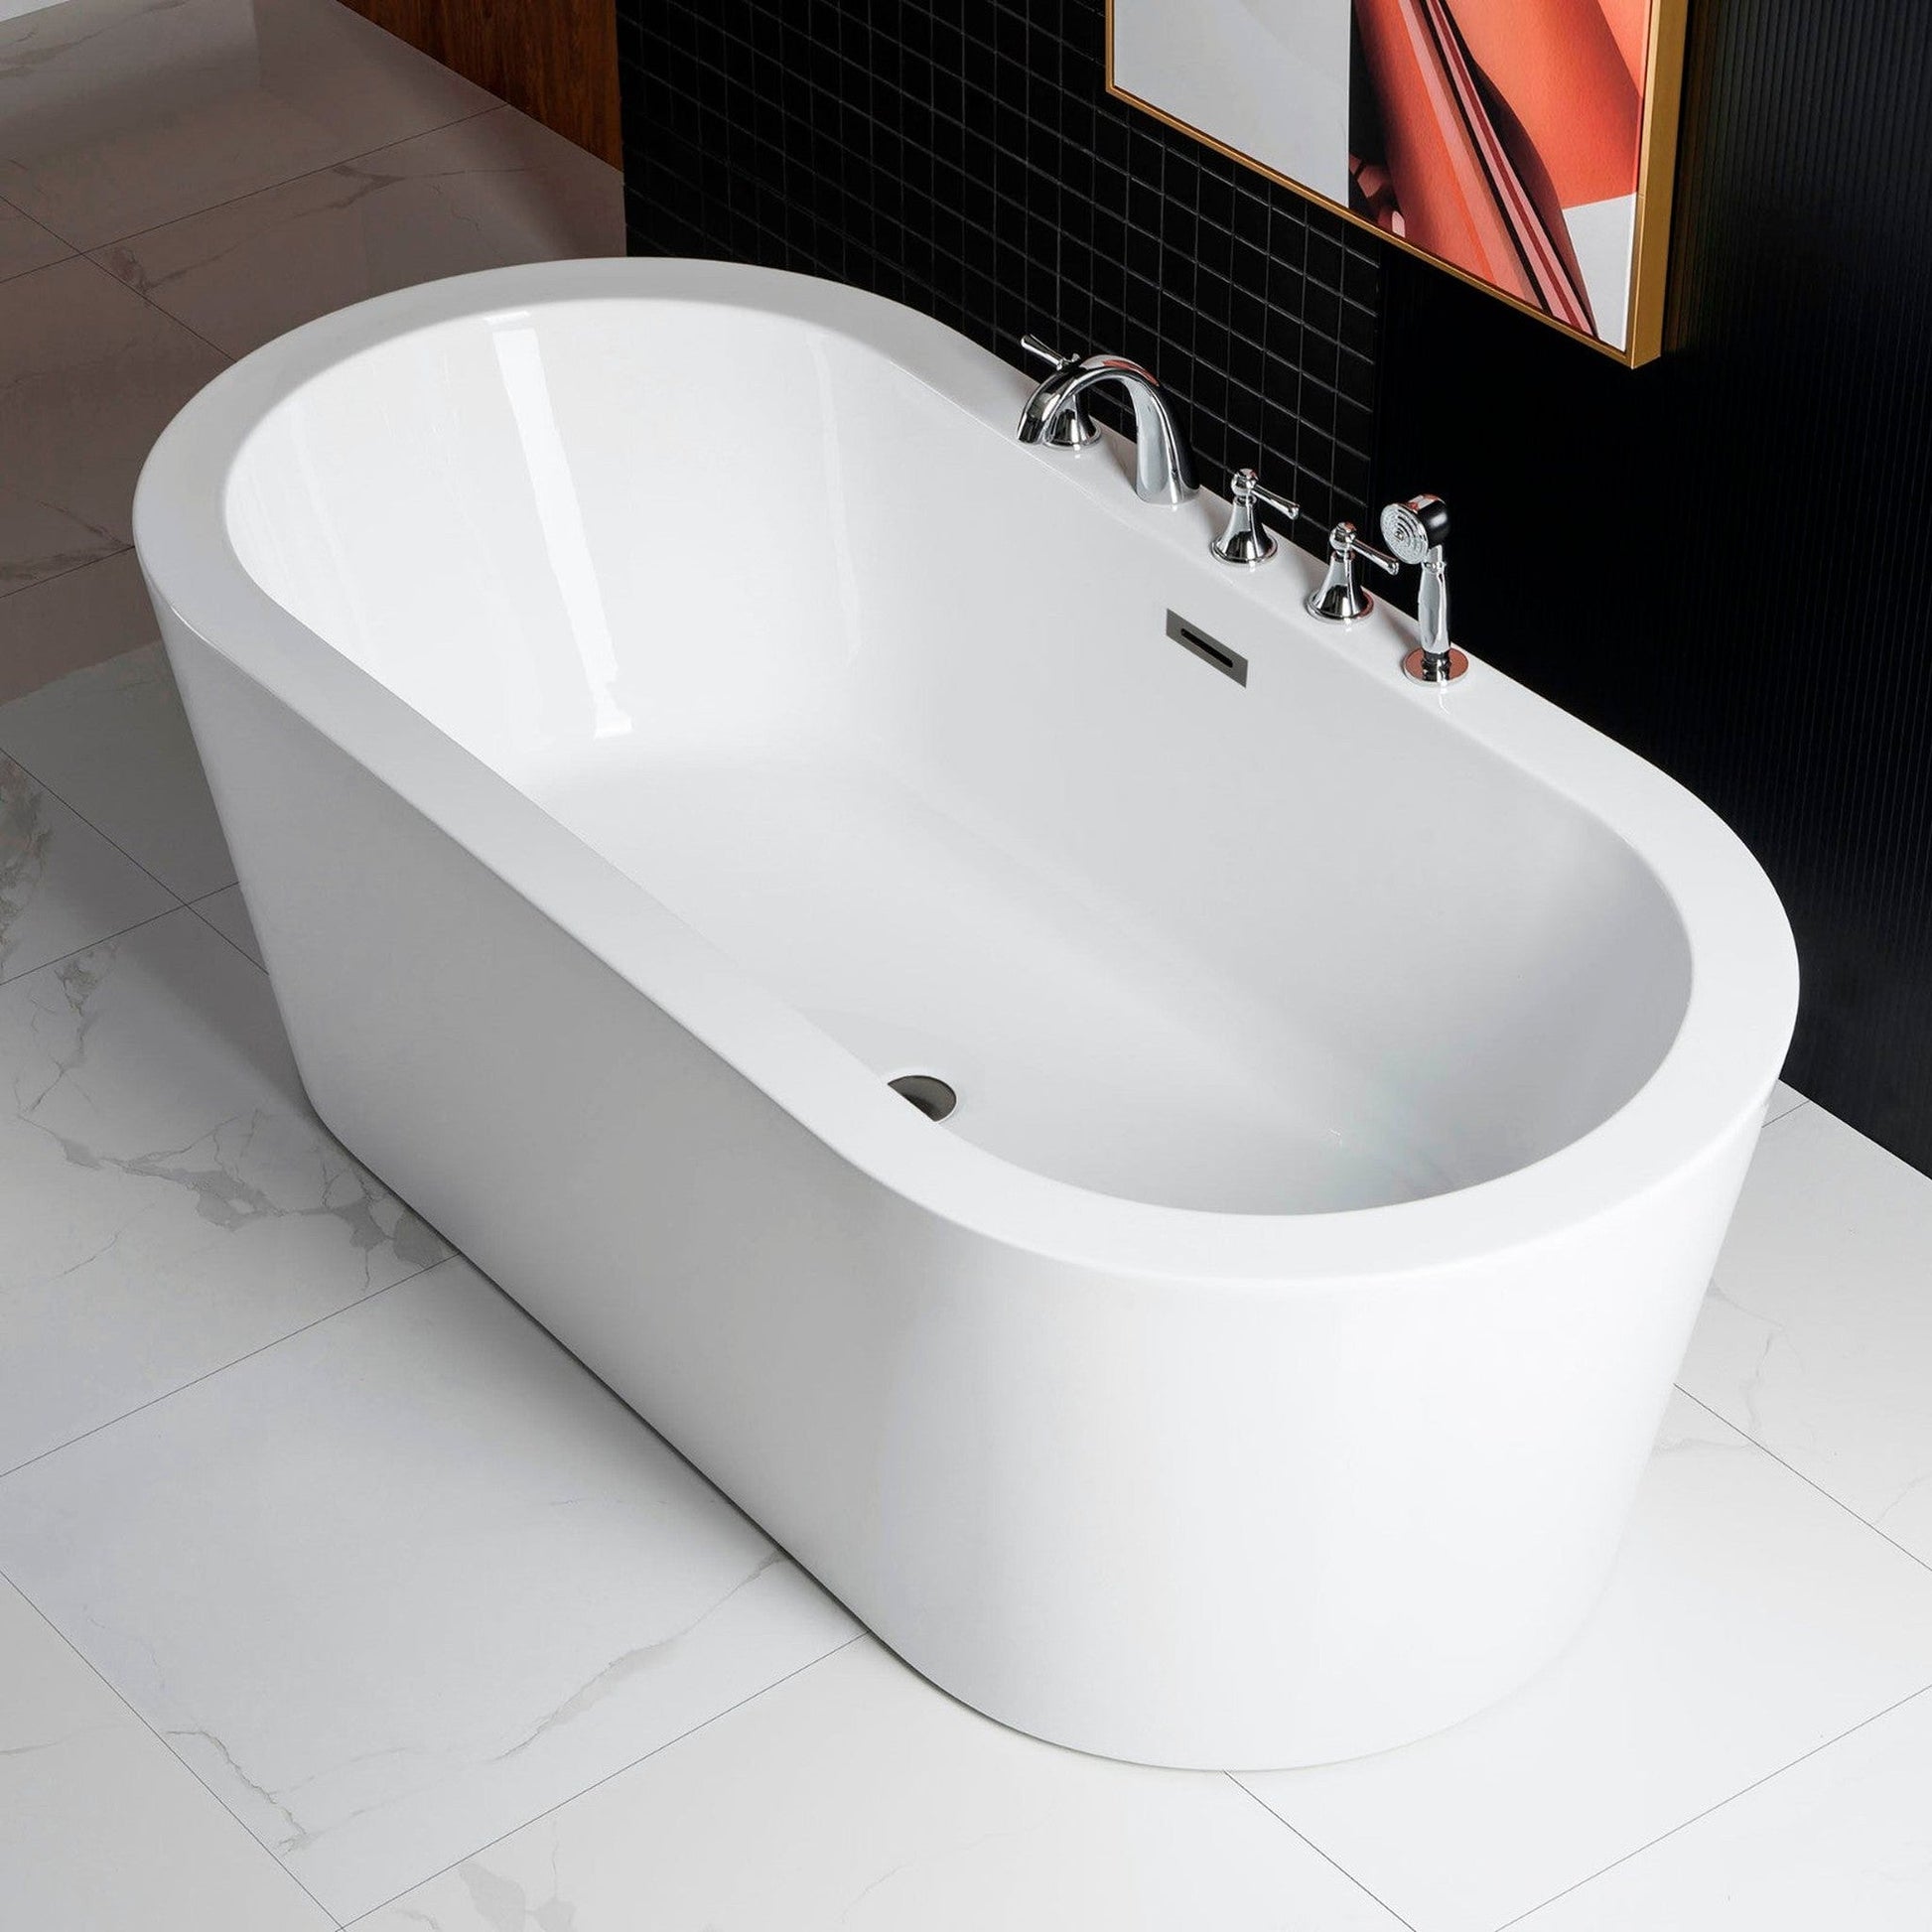 WoodBridge B0012 59" White Acrylic Freestanding Soaking Bathtub With Matte Black Drain, Overflow, F0072MBVT Tub Filler and Caddy Tray